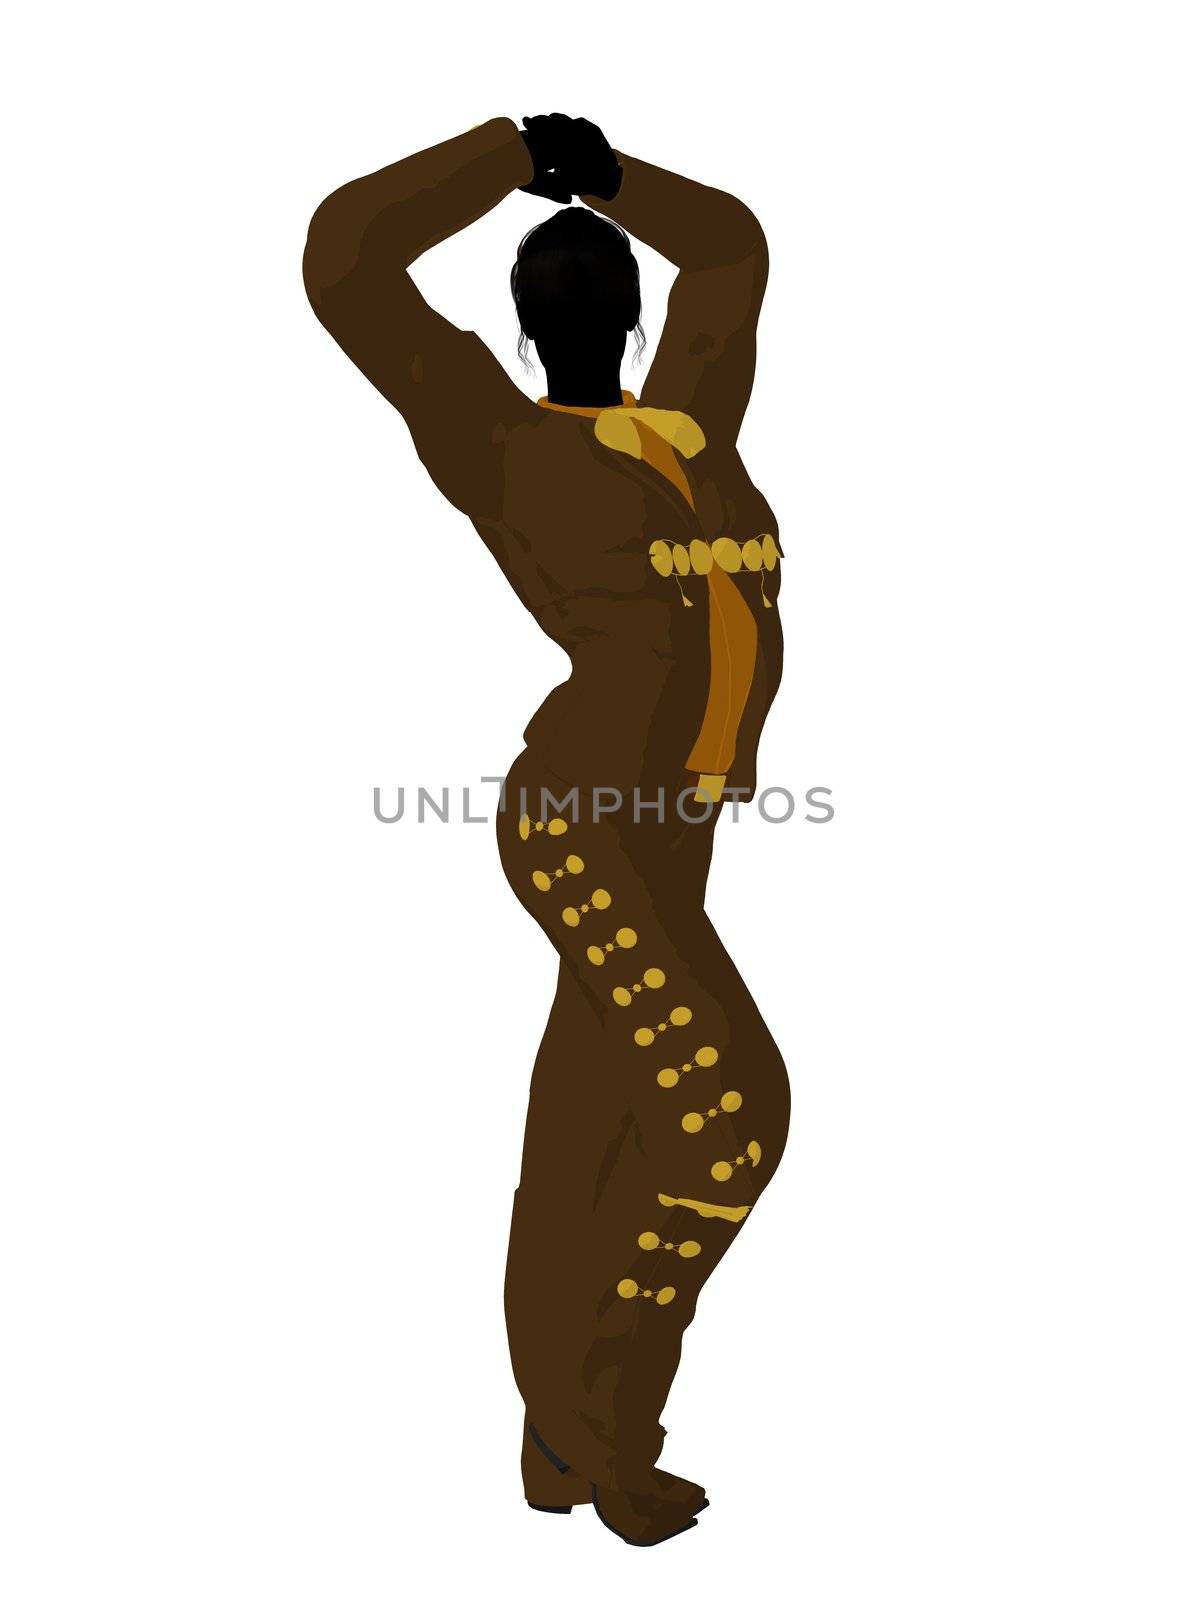 Female mariachi illustration silhouette illustration on a white background